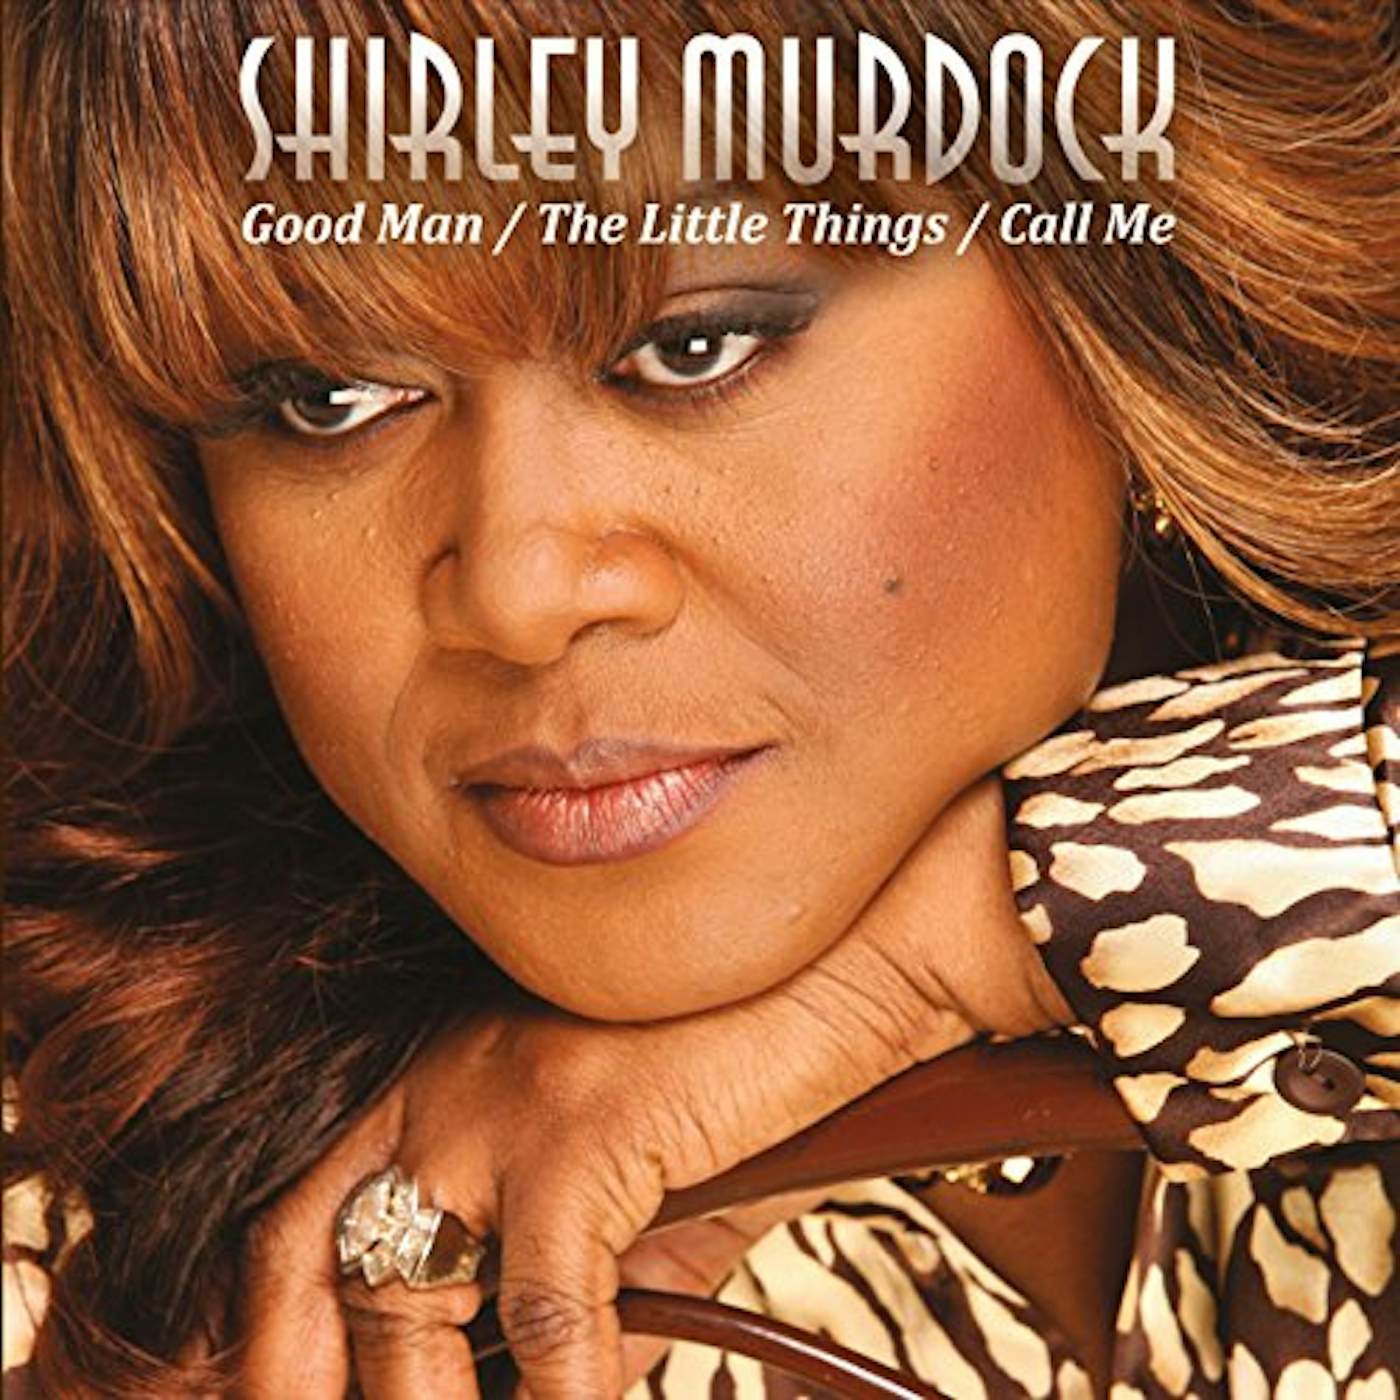 Shirley Murdock GOOD MAN / LITTLE THINGS / CALL ME CD